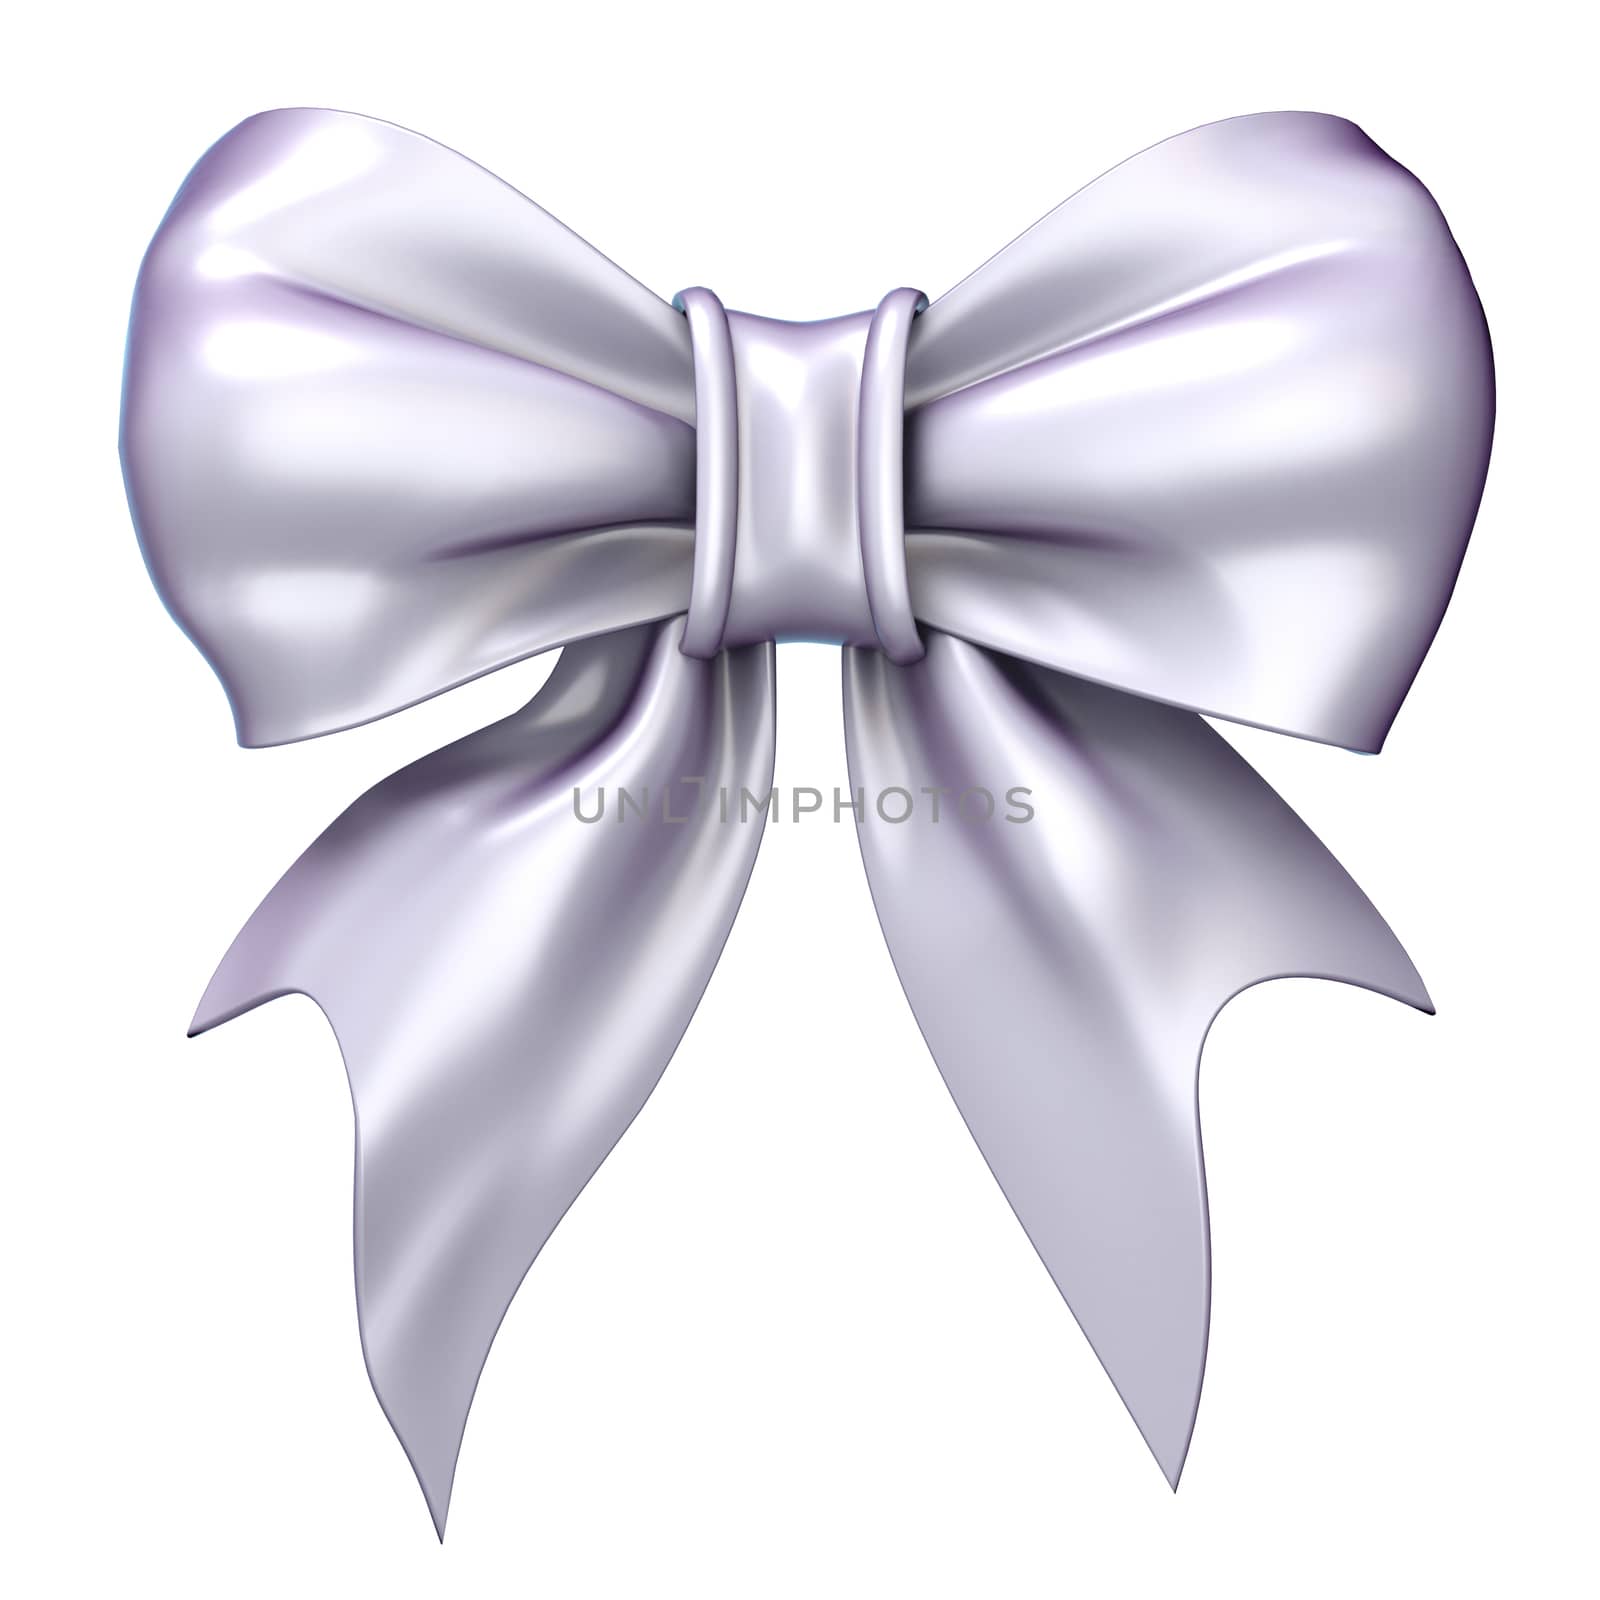 White, satin, glossy ribbon bow. 3D render illustration isolated on white background